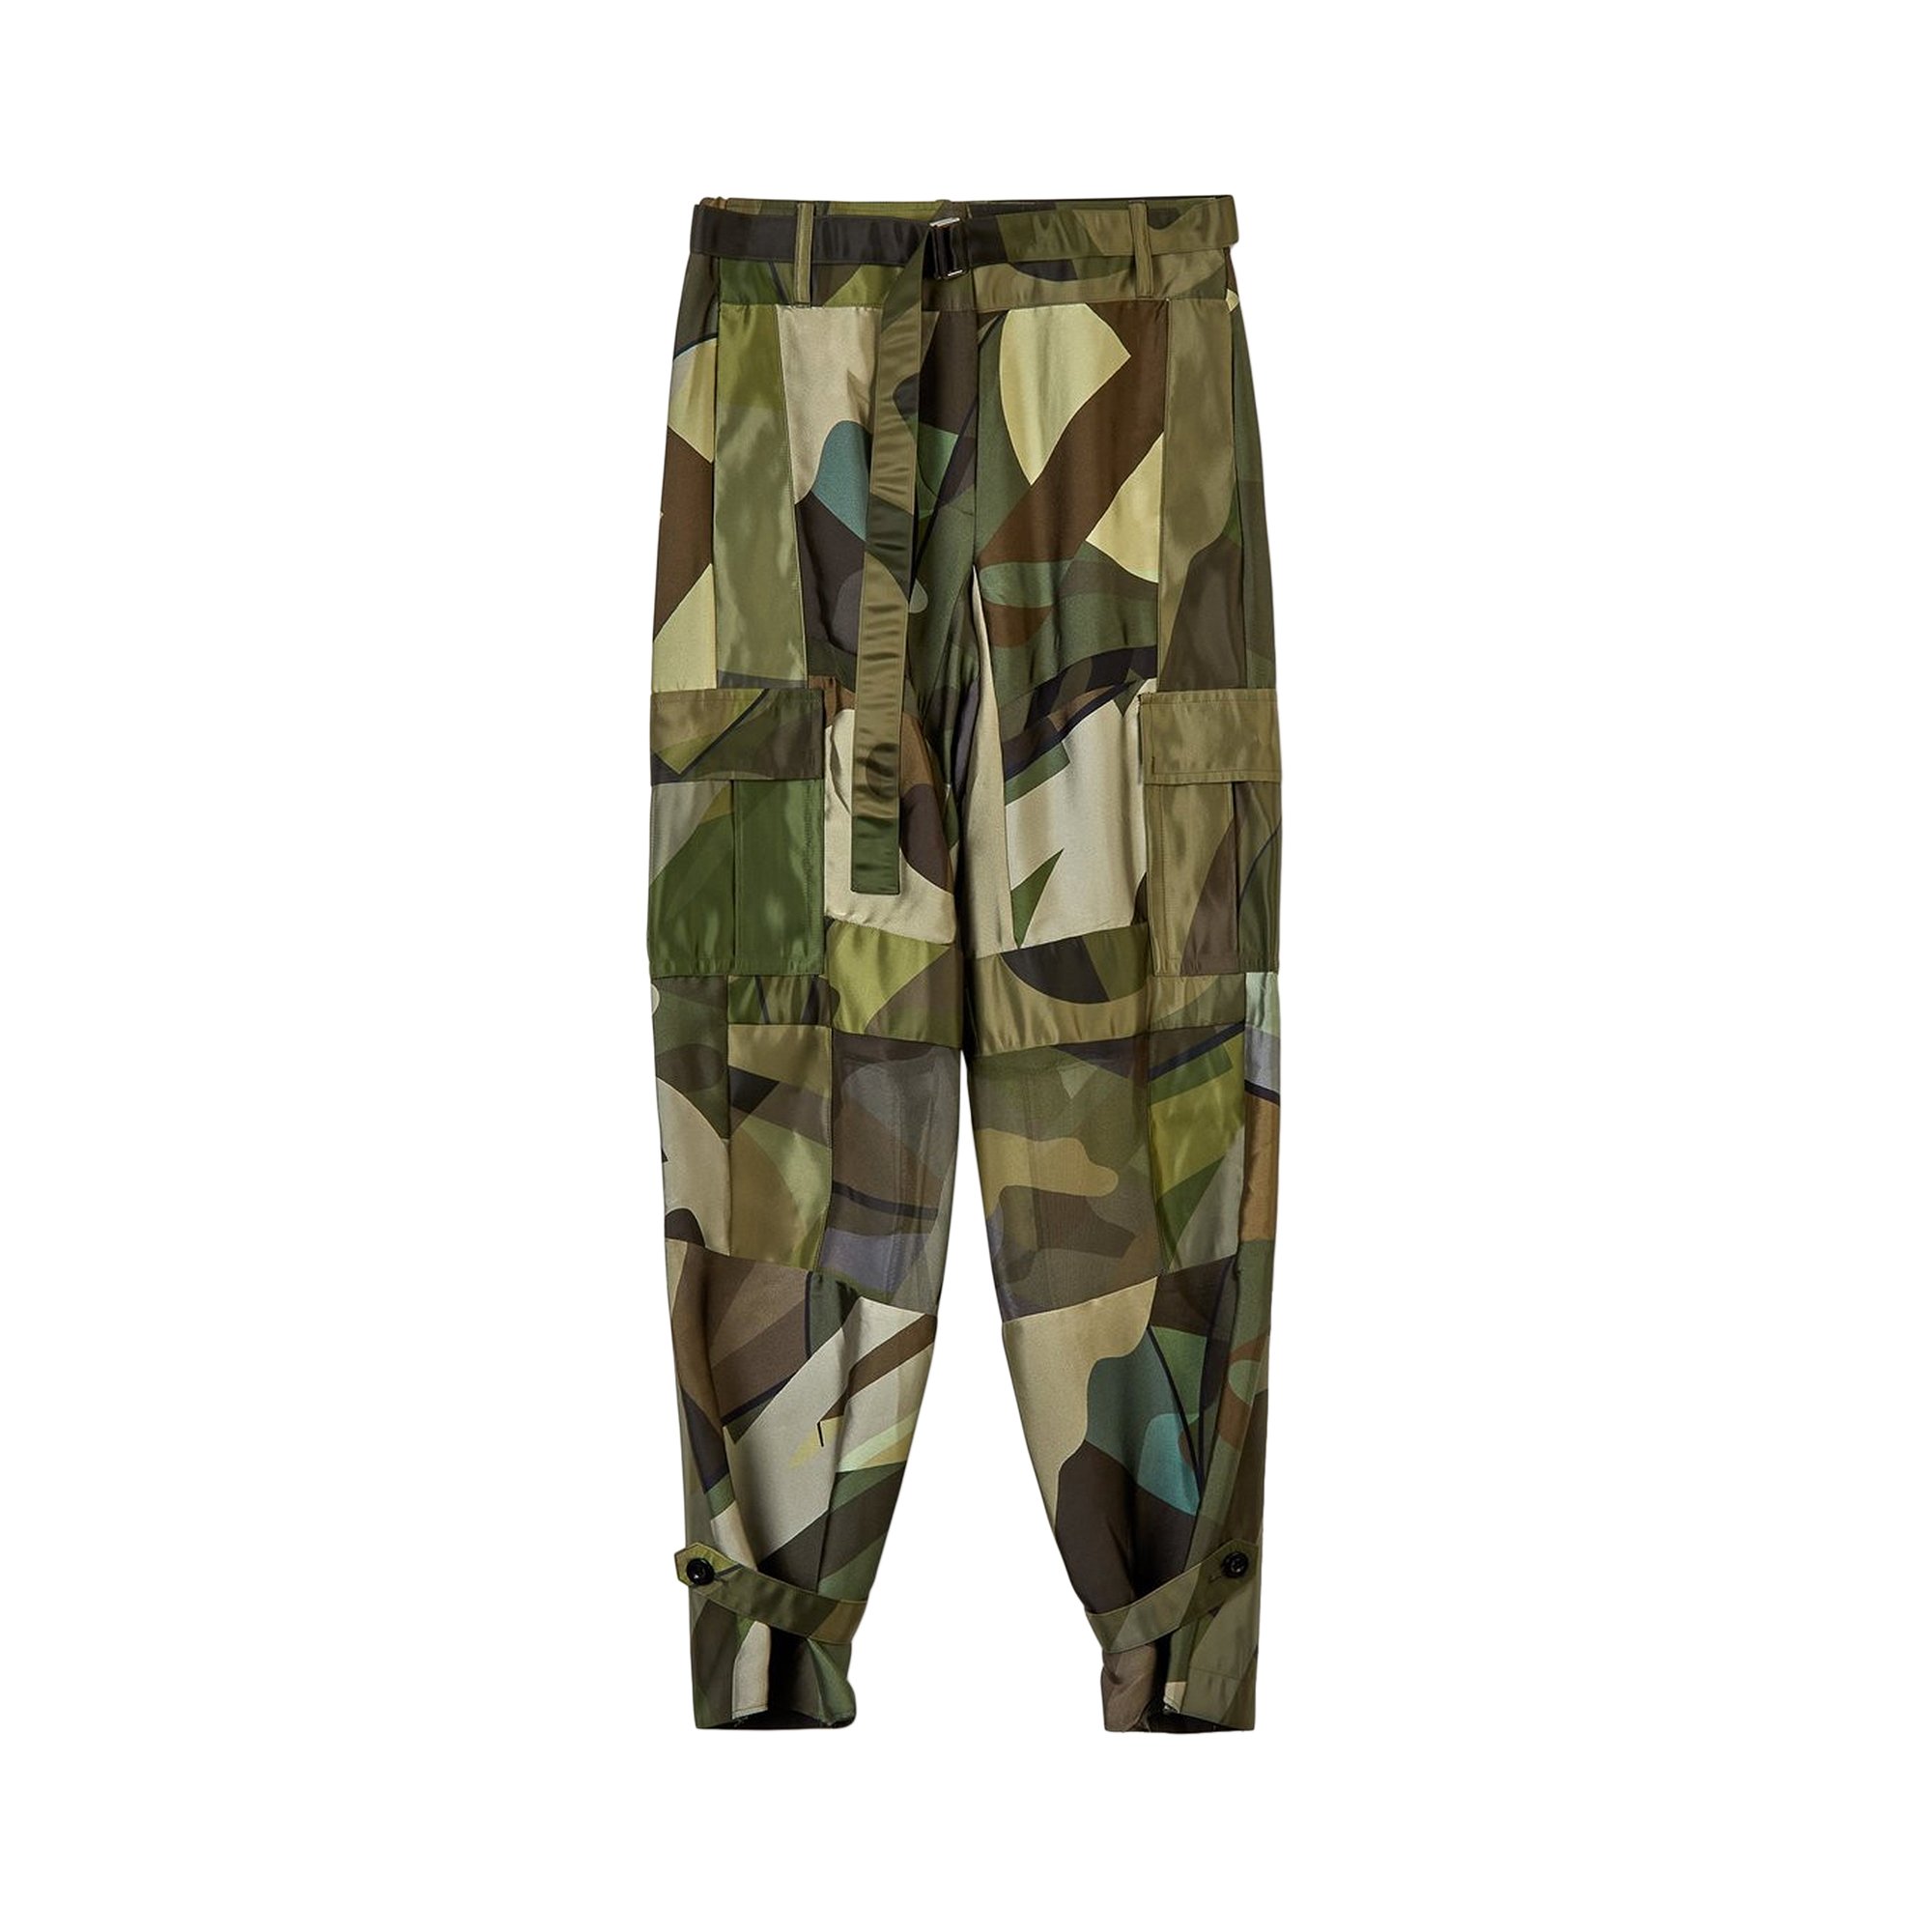 Buy Sacai x KAWS Print Trousers 'Camouflage' - 2105684 9361 | GOAT